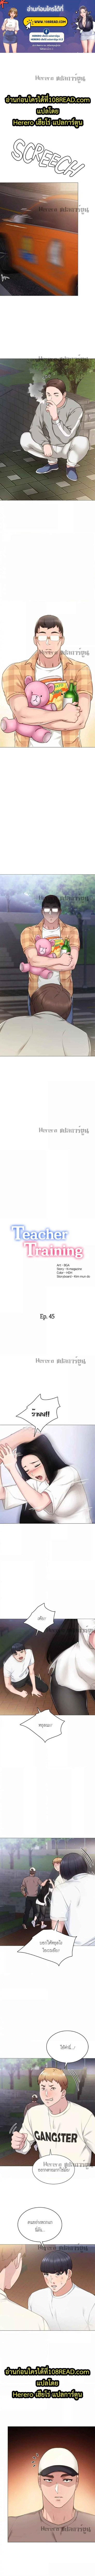 Teaching Practice 45 1